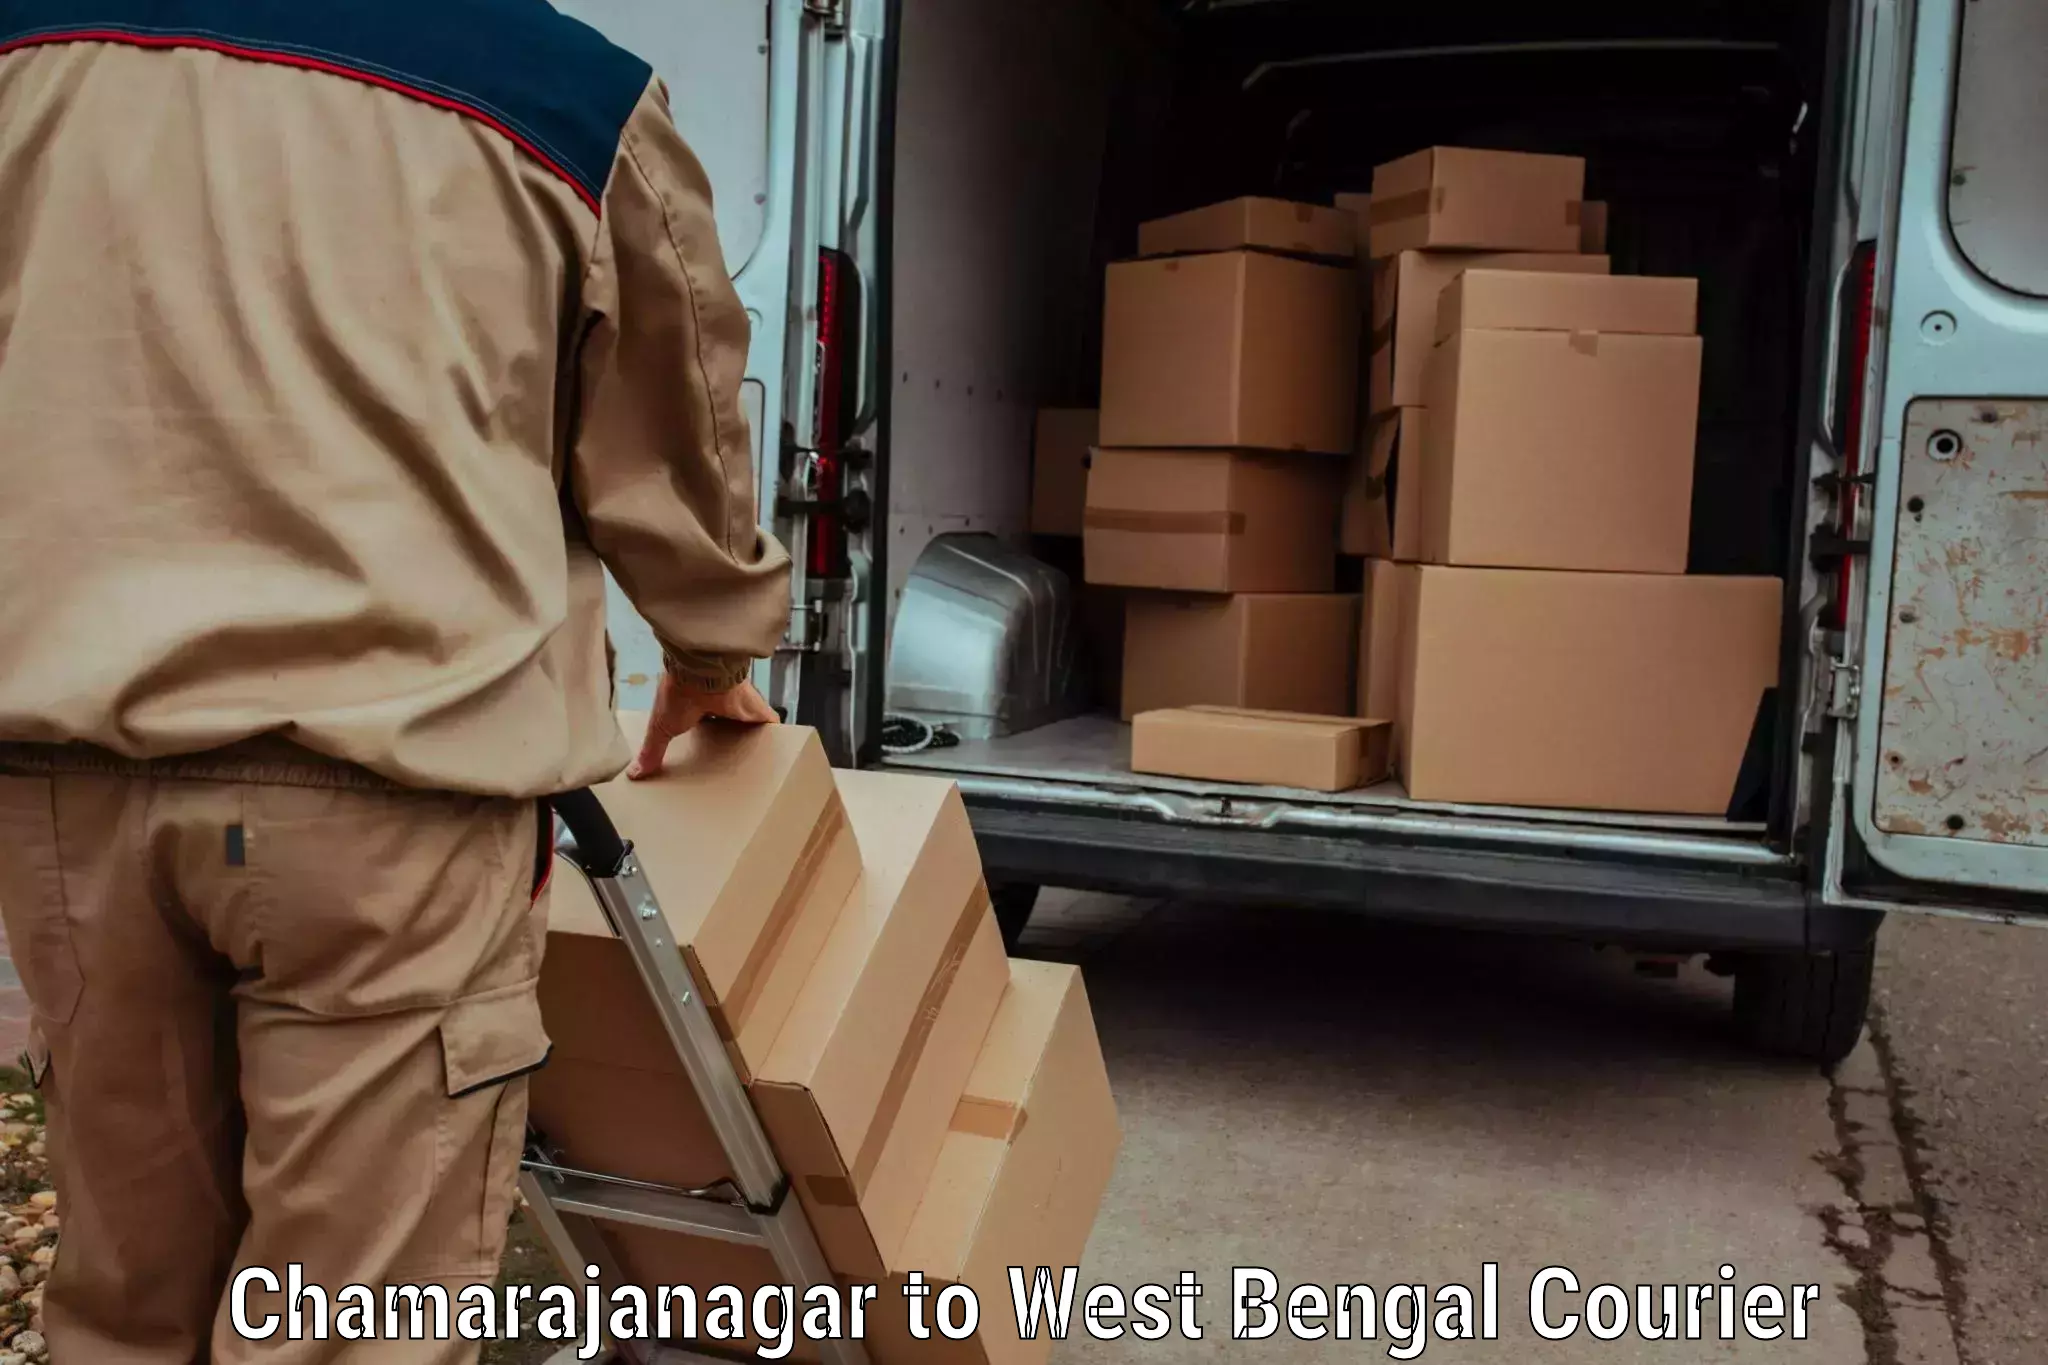 Reliable delivery network Chamarajanagar to Bankura